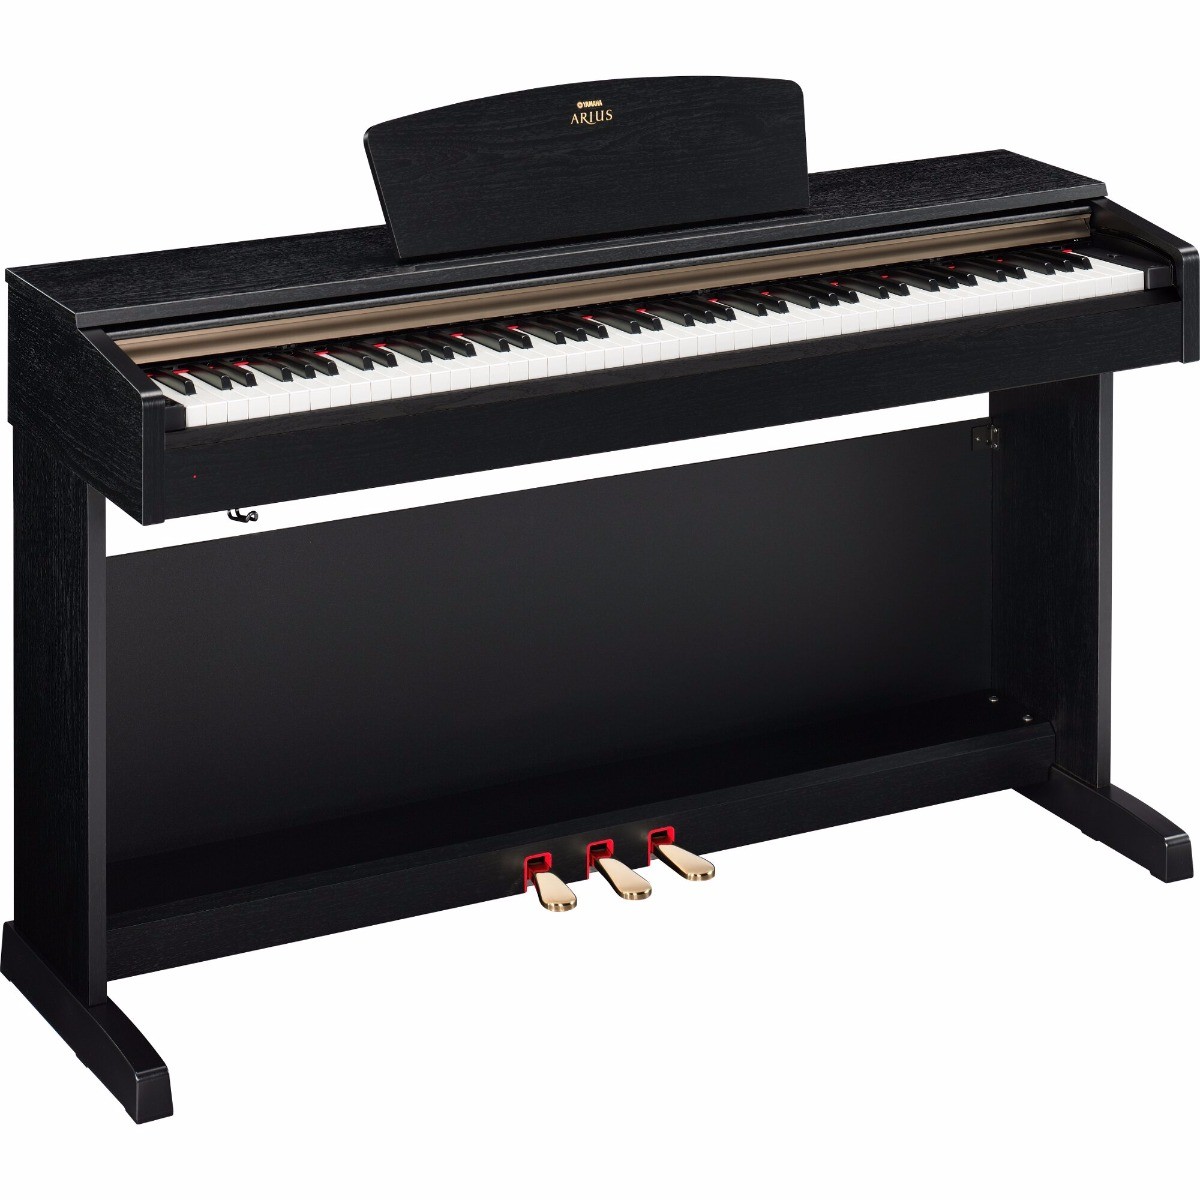 Yamaha Arius YDP-161 B digitale piano | Trustpilot score: 9.6!